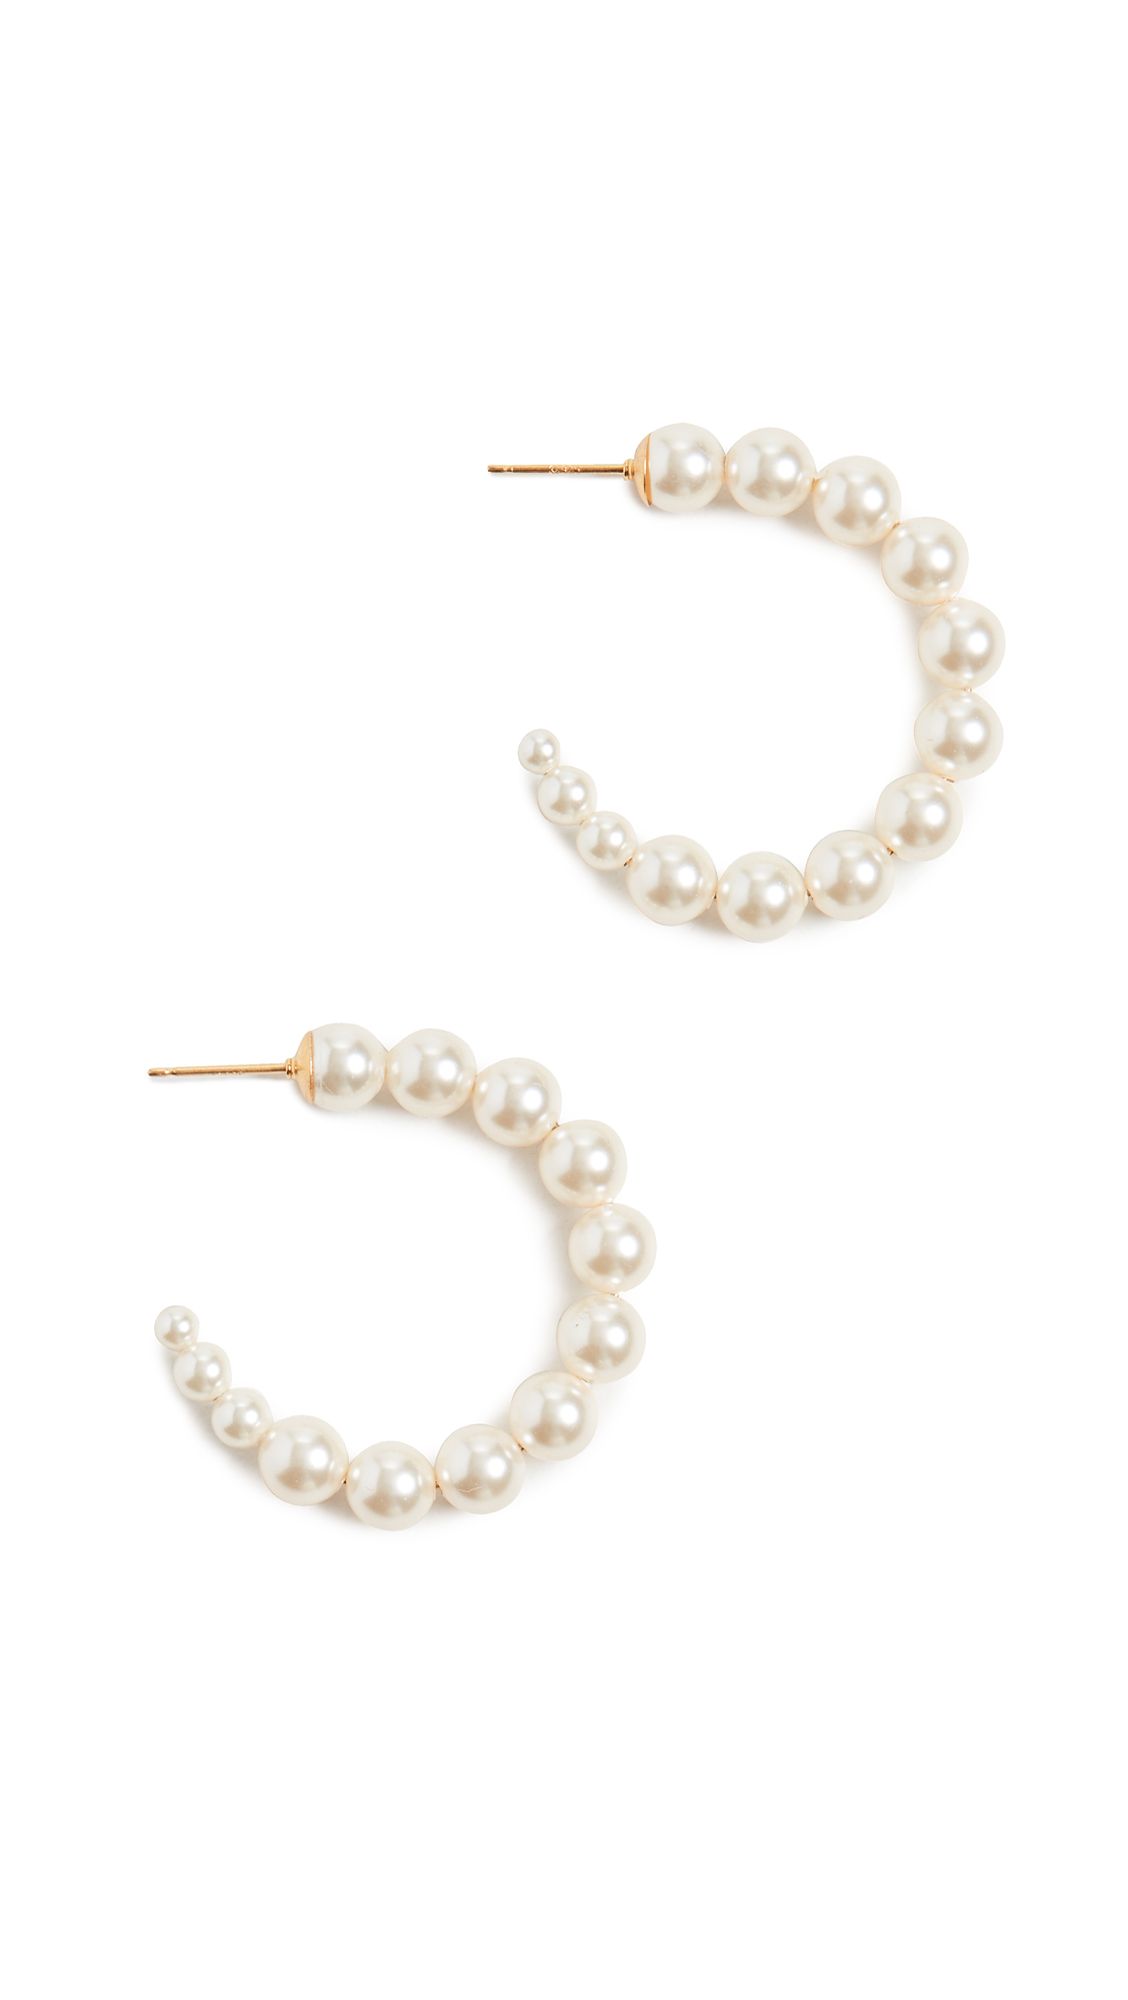 Cream Pearl Earrings | Shopbop